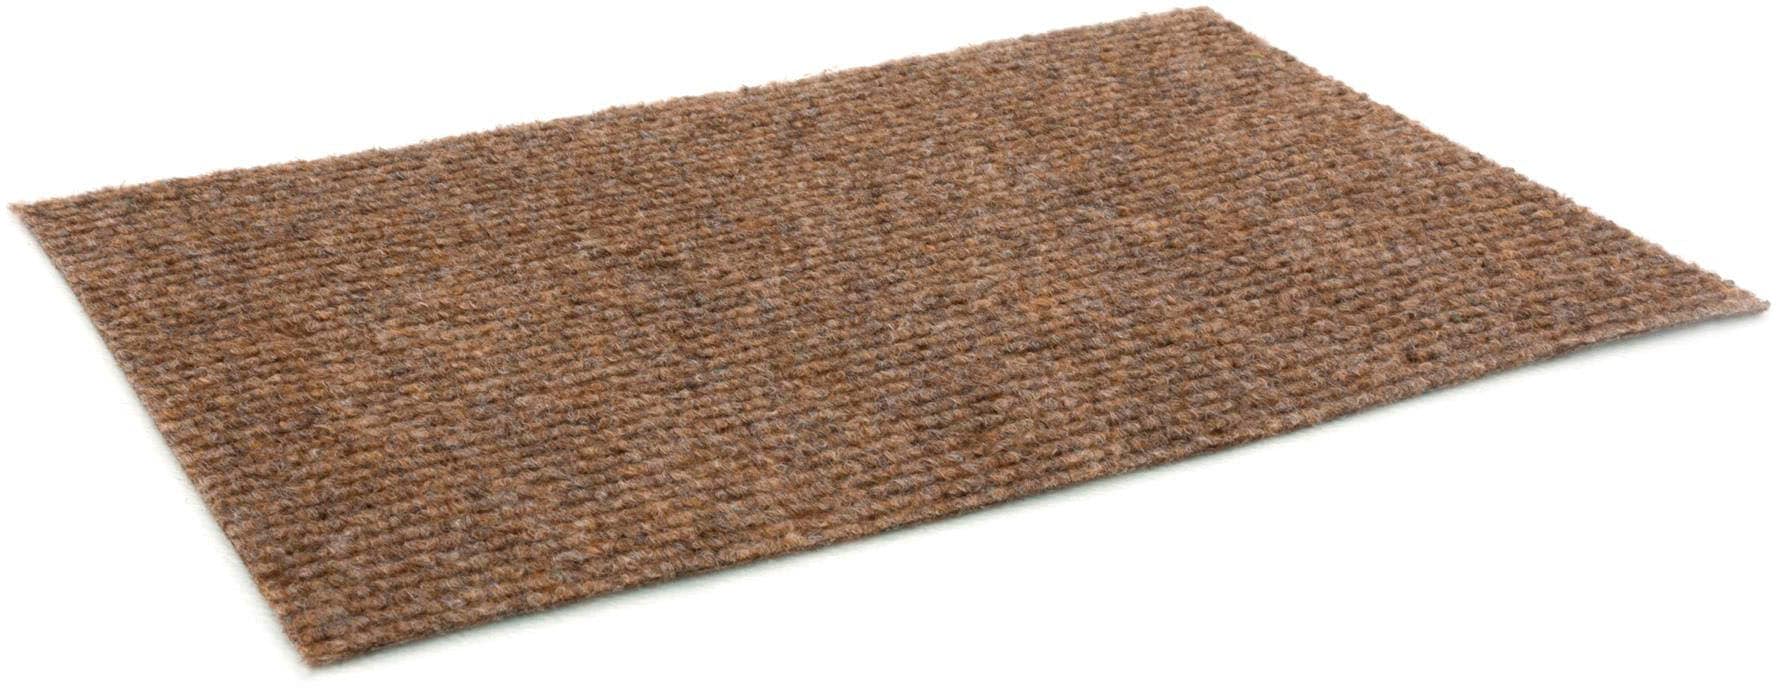 Teppich-Boden Rips Malta B1 - Braun, 2,00m x 6,00m Rips-Nadelfilz, Schwer Entflammbar, Höhe ca.2mm, Gerippter Bodenbelag für Events und Messen